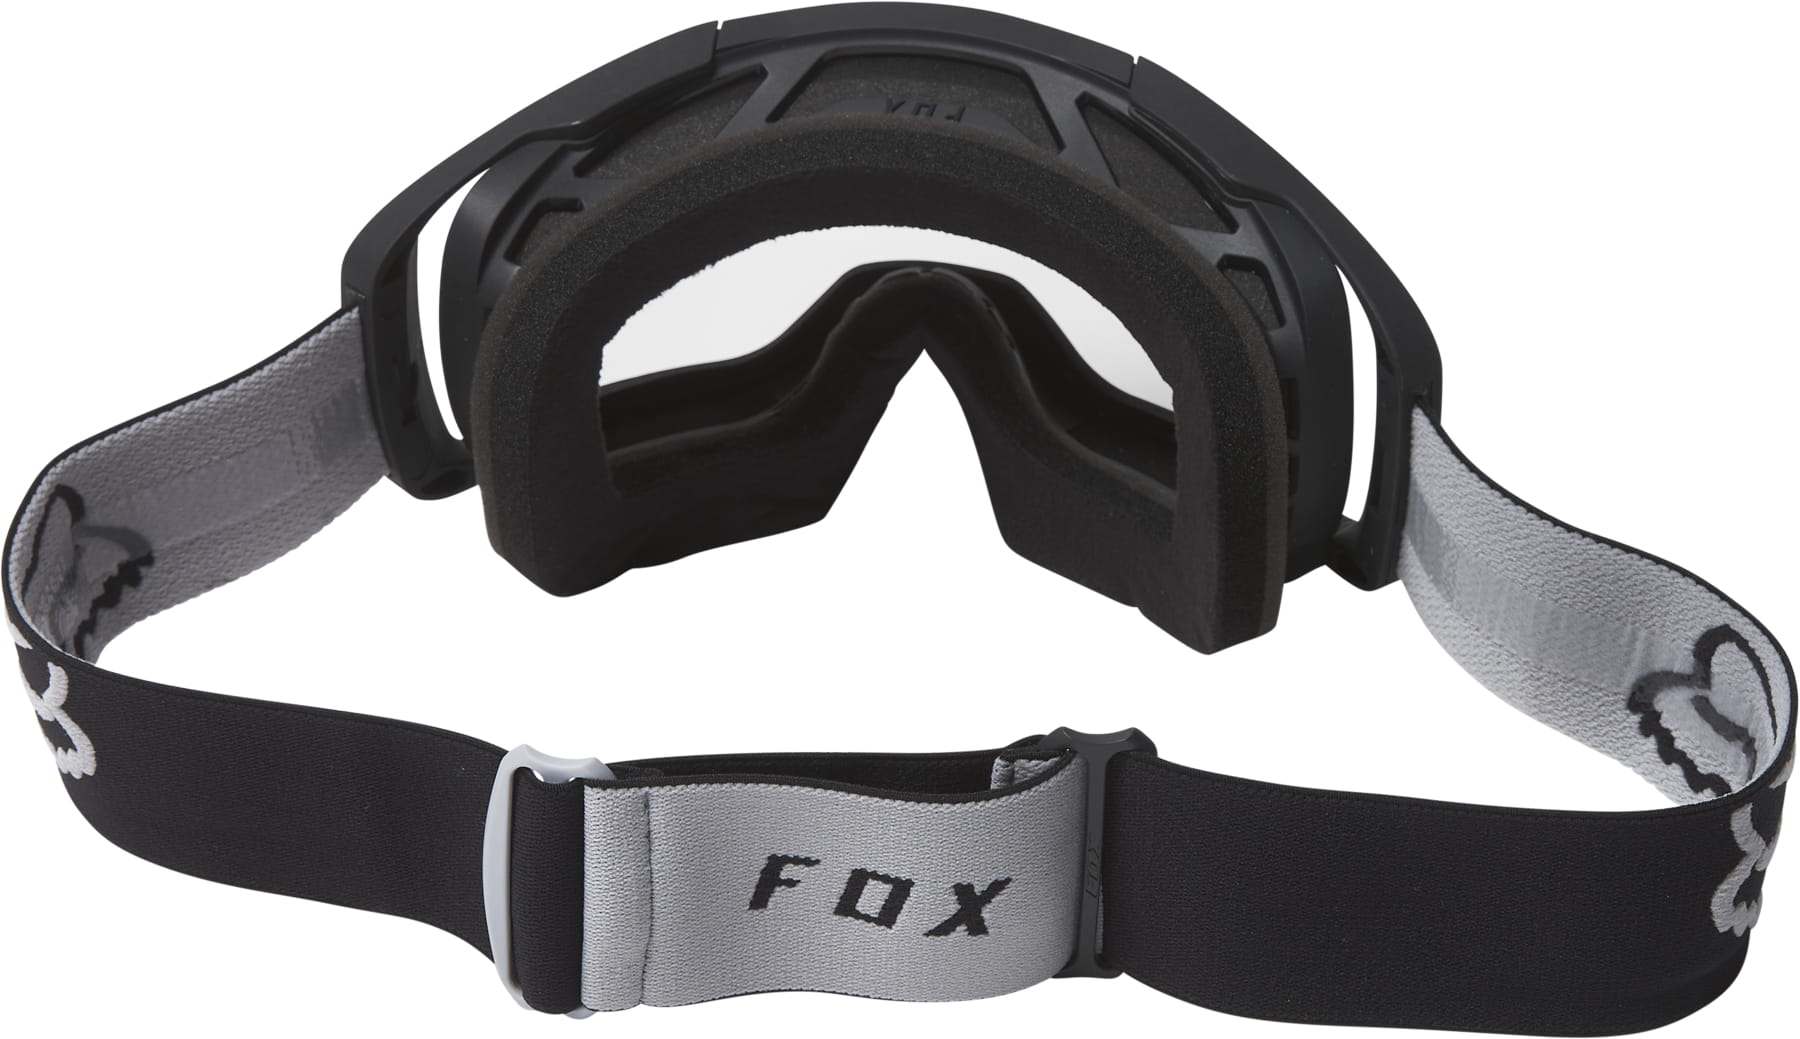 Grey Fox Airspace II Prix Cycling Goggles 